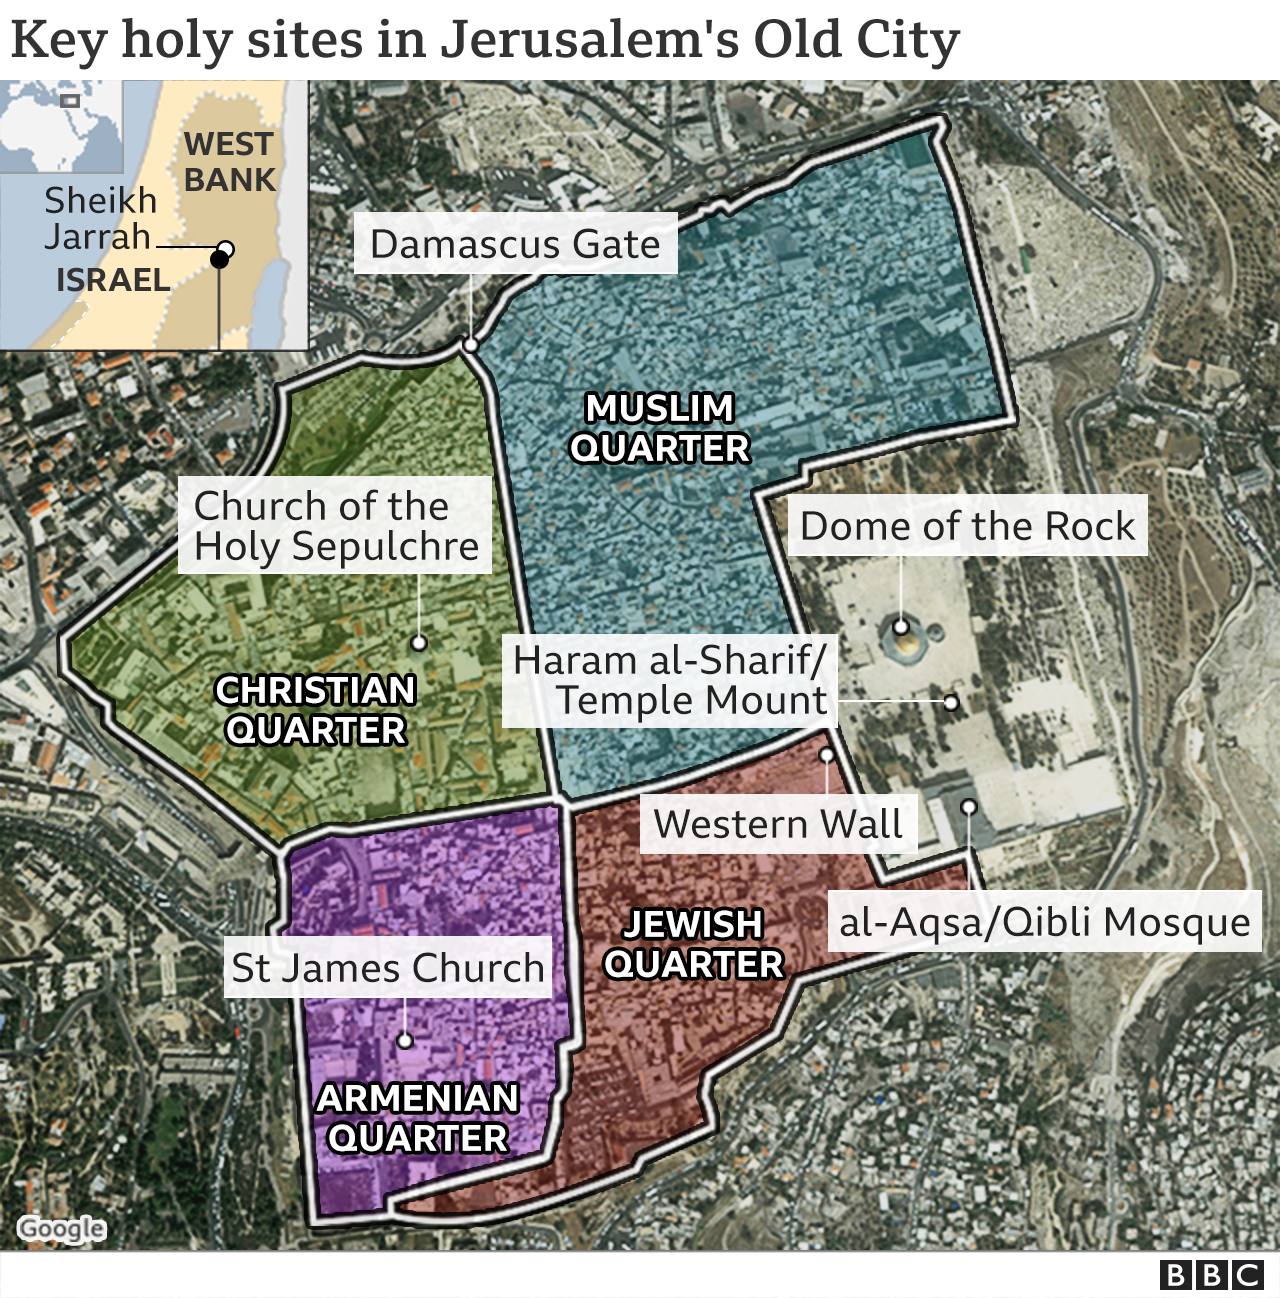 Map showing key holy sites in Jerusalem